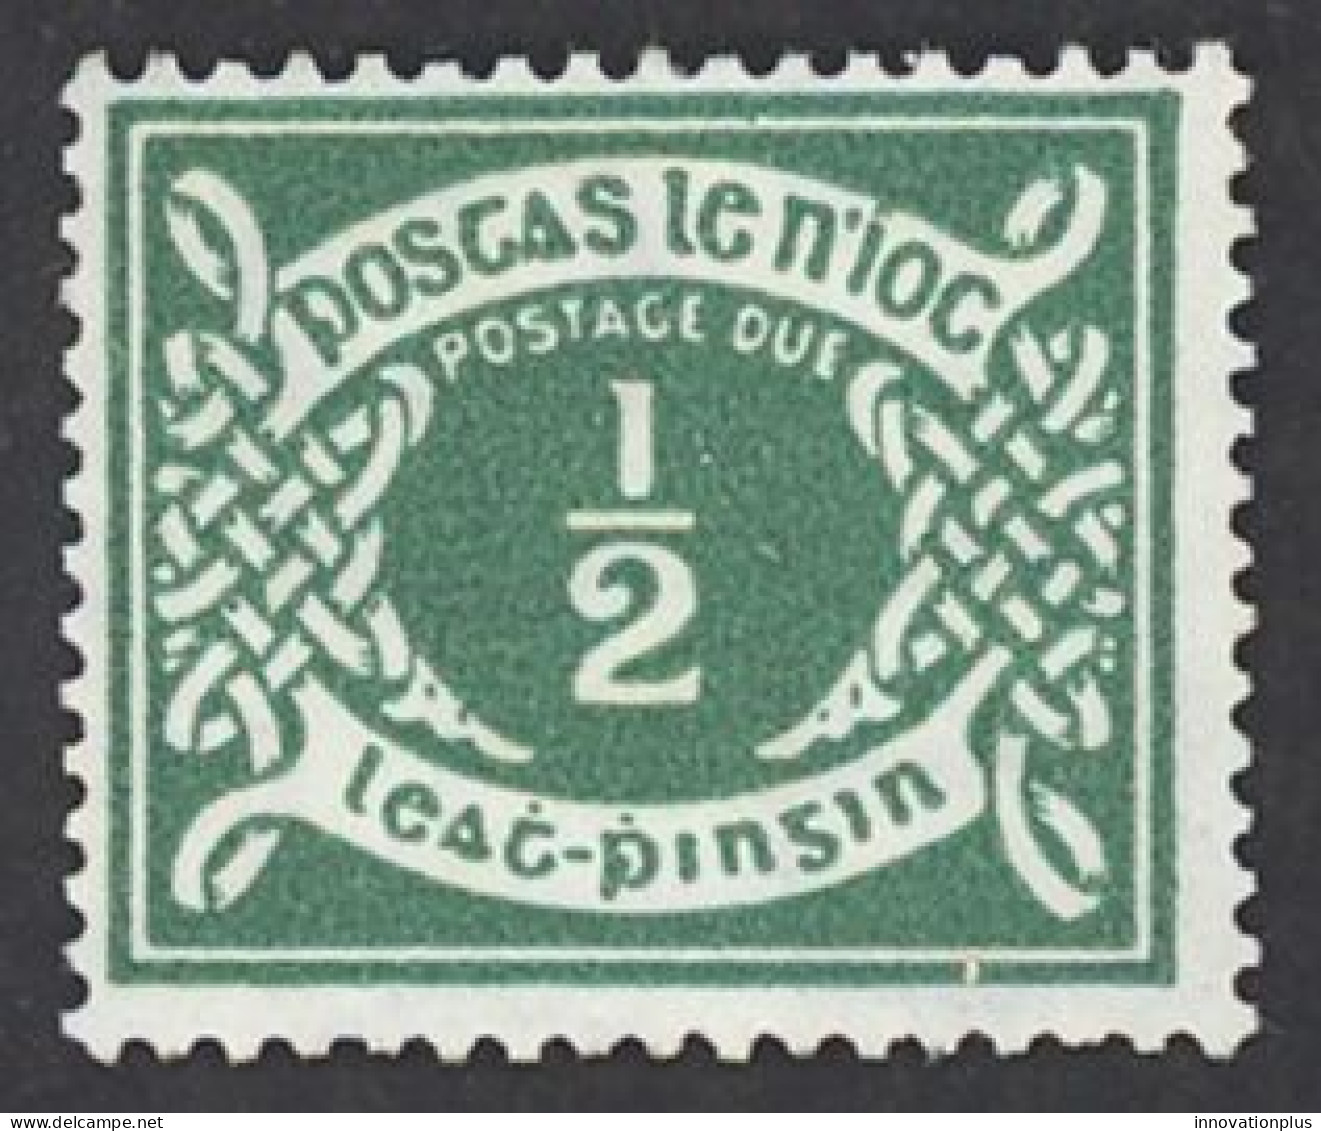 Ireland Sc# J5 Mint No Gum 1943 ½p Postage Due - Timbres-taxe